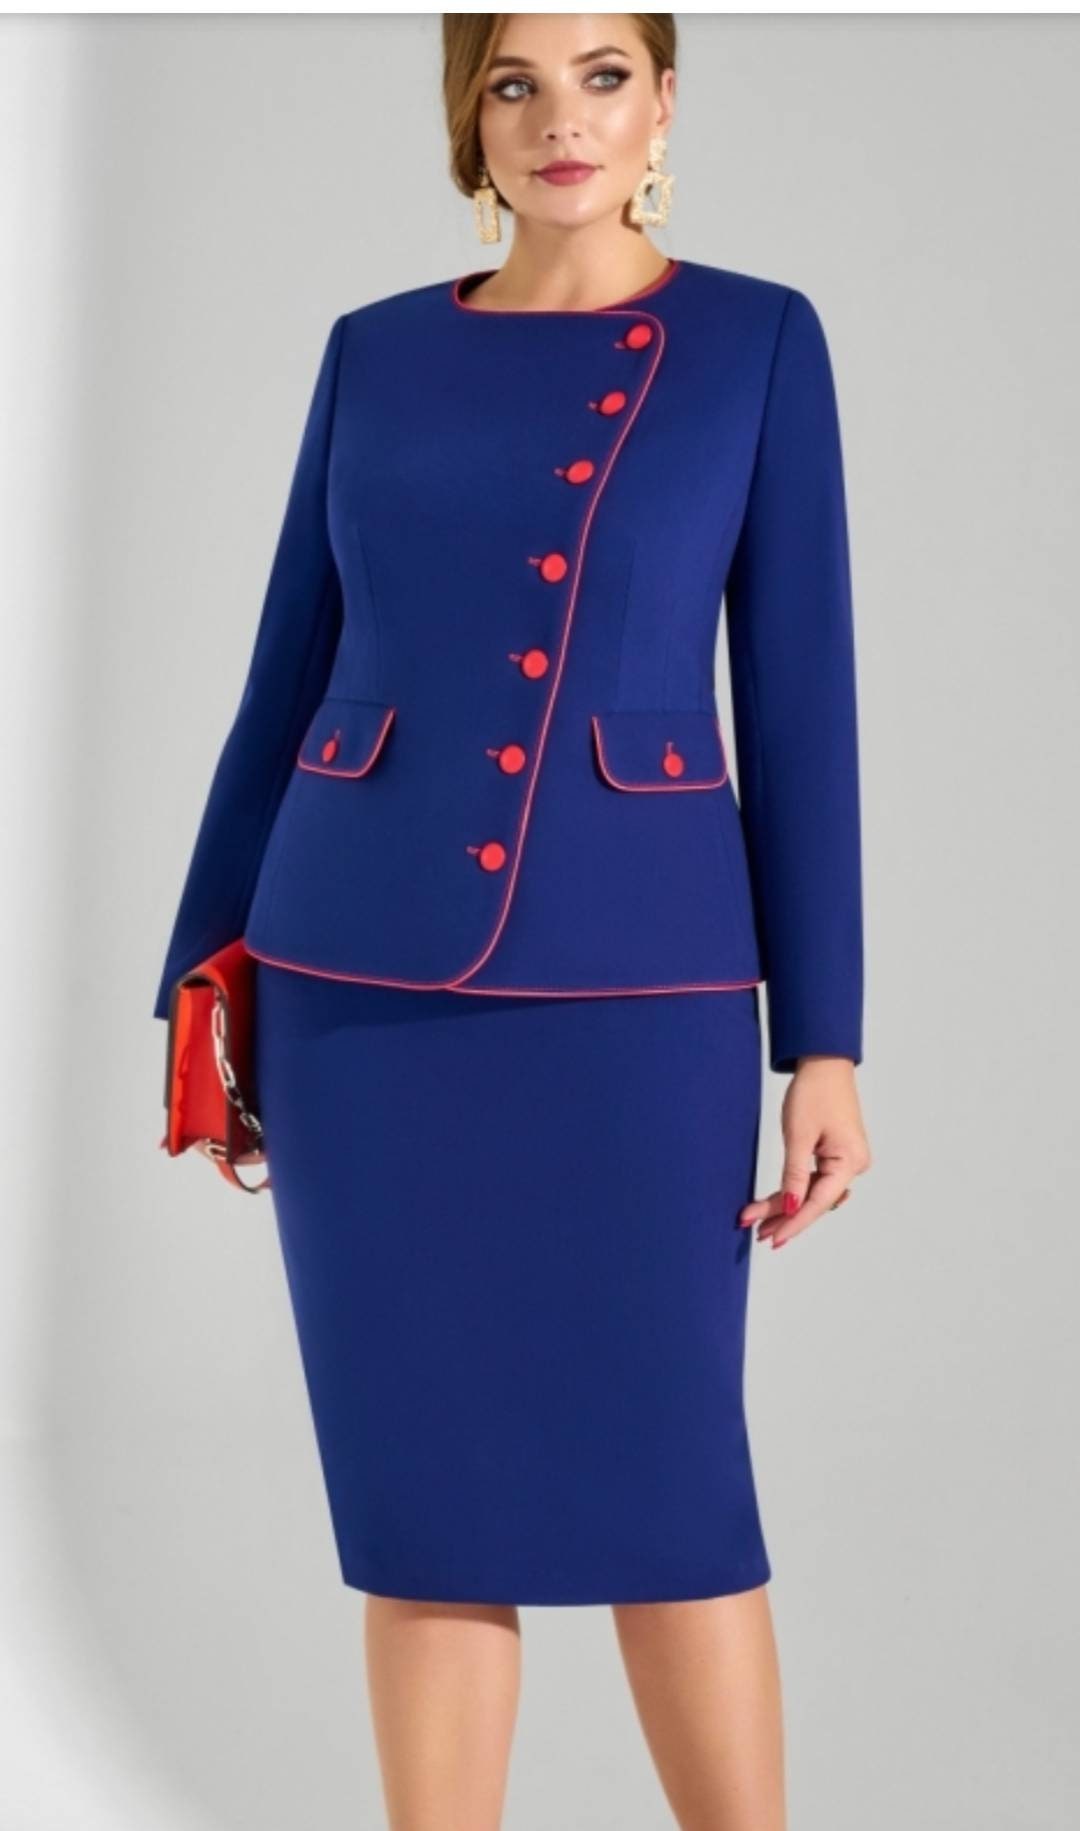 Royal blue with raspberry trim Suitdog show suit | Etsy